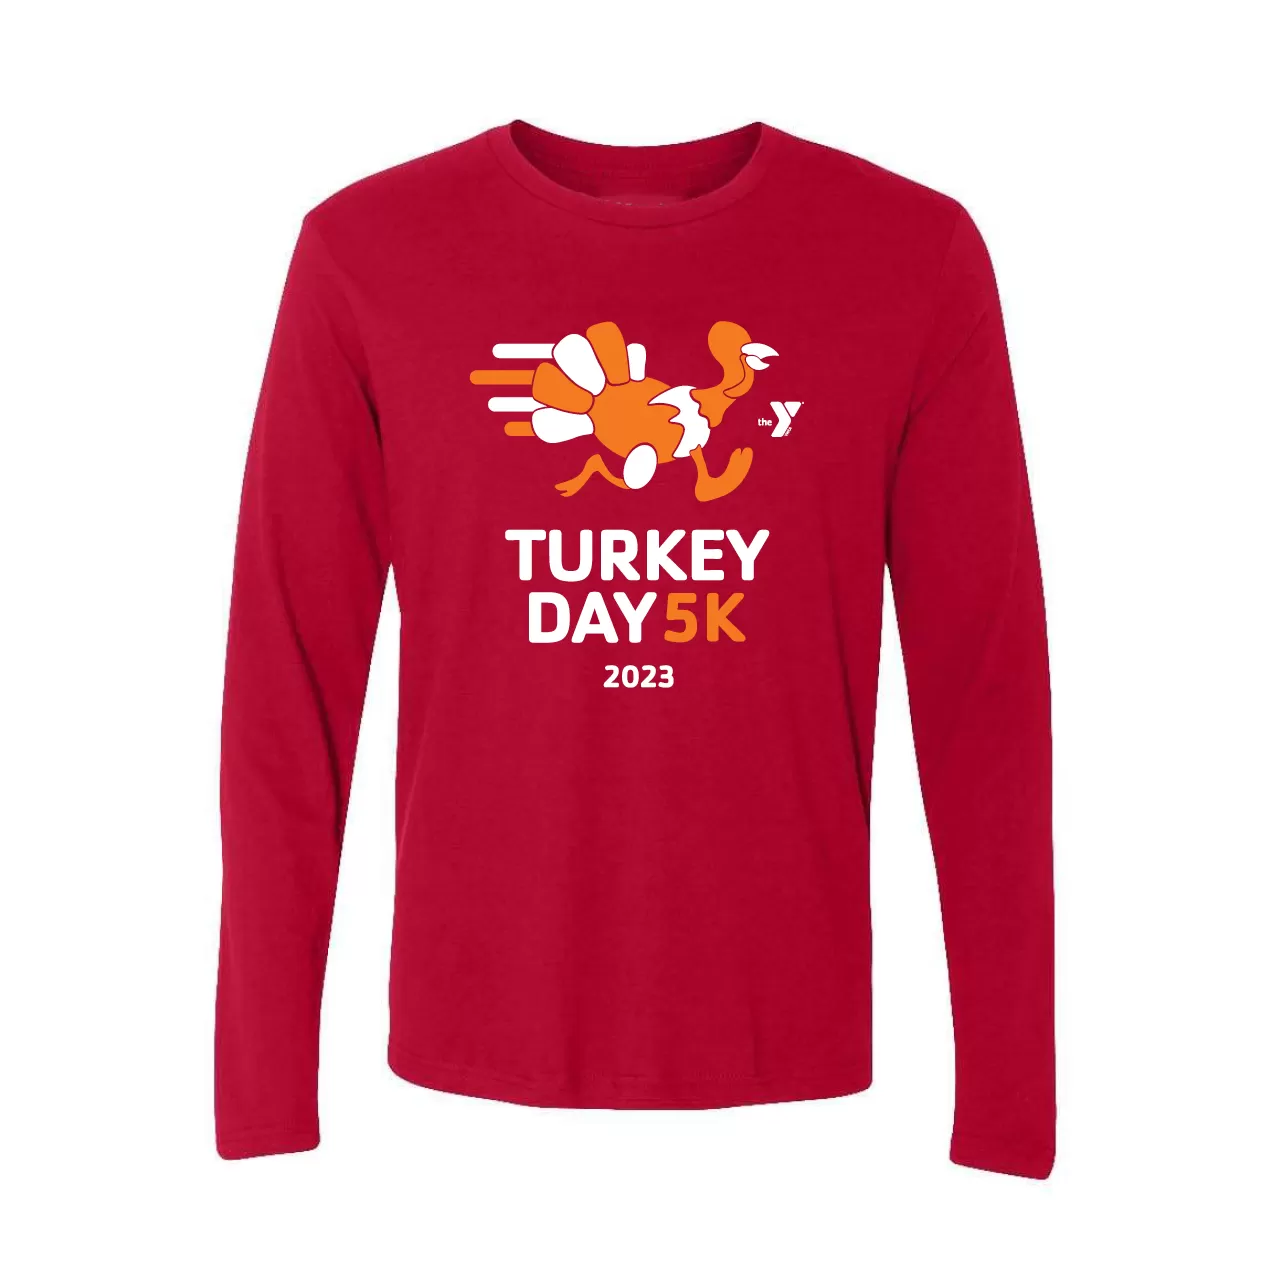 Turkey Day 5K Free Shirt